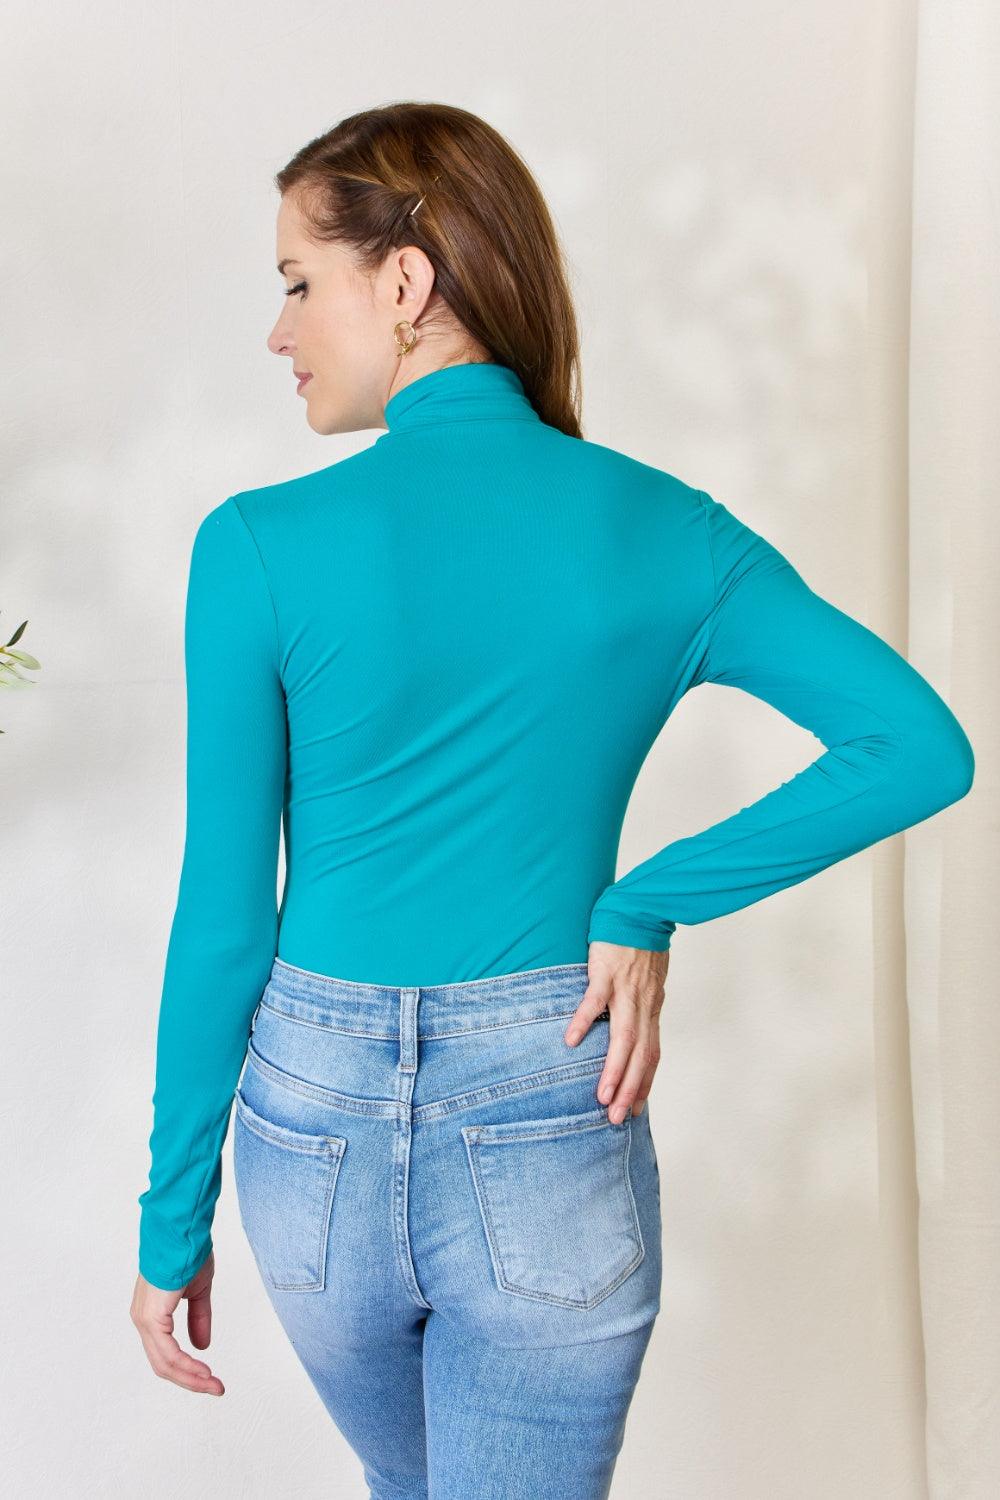 Women's Shirts - Bodysuits Teal Turtleneck Long Sleeve Bodysuit